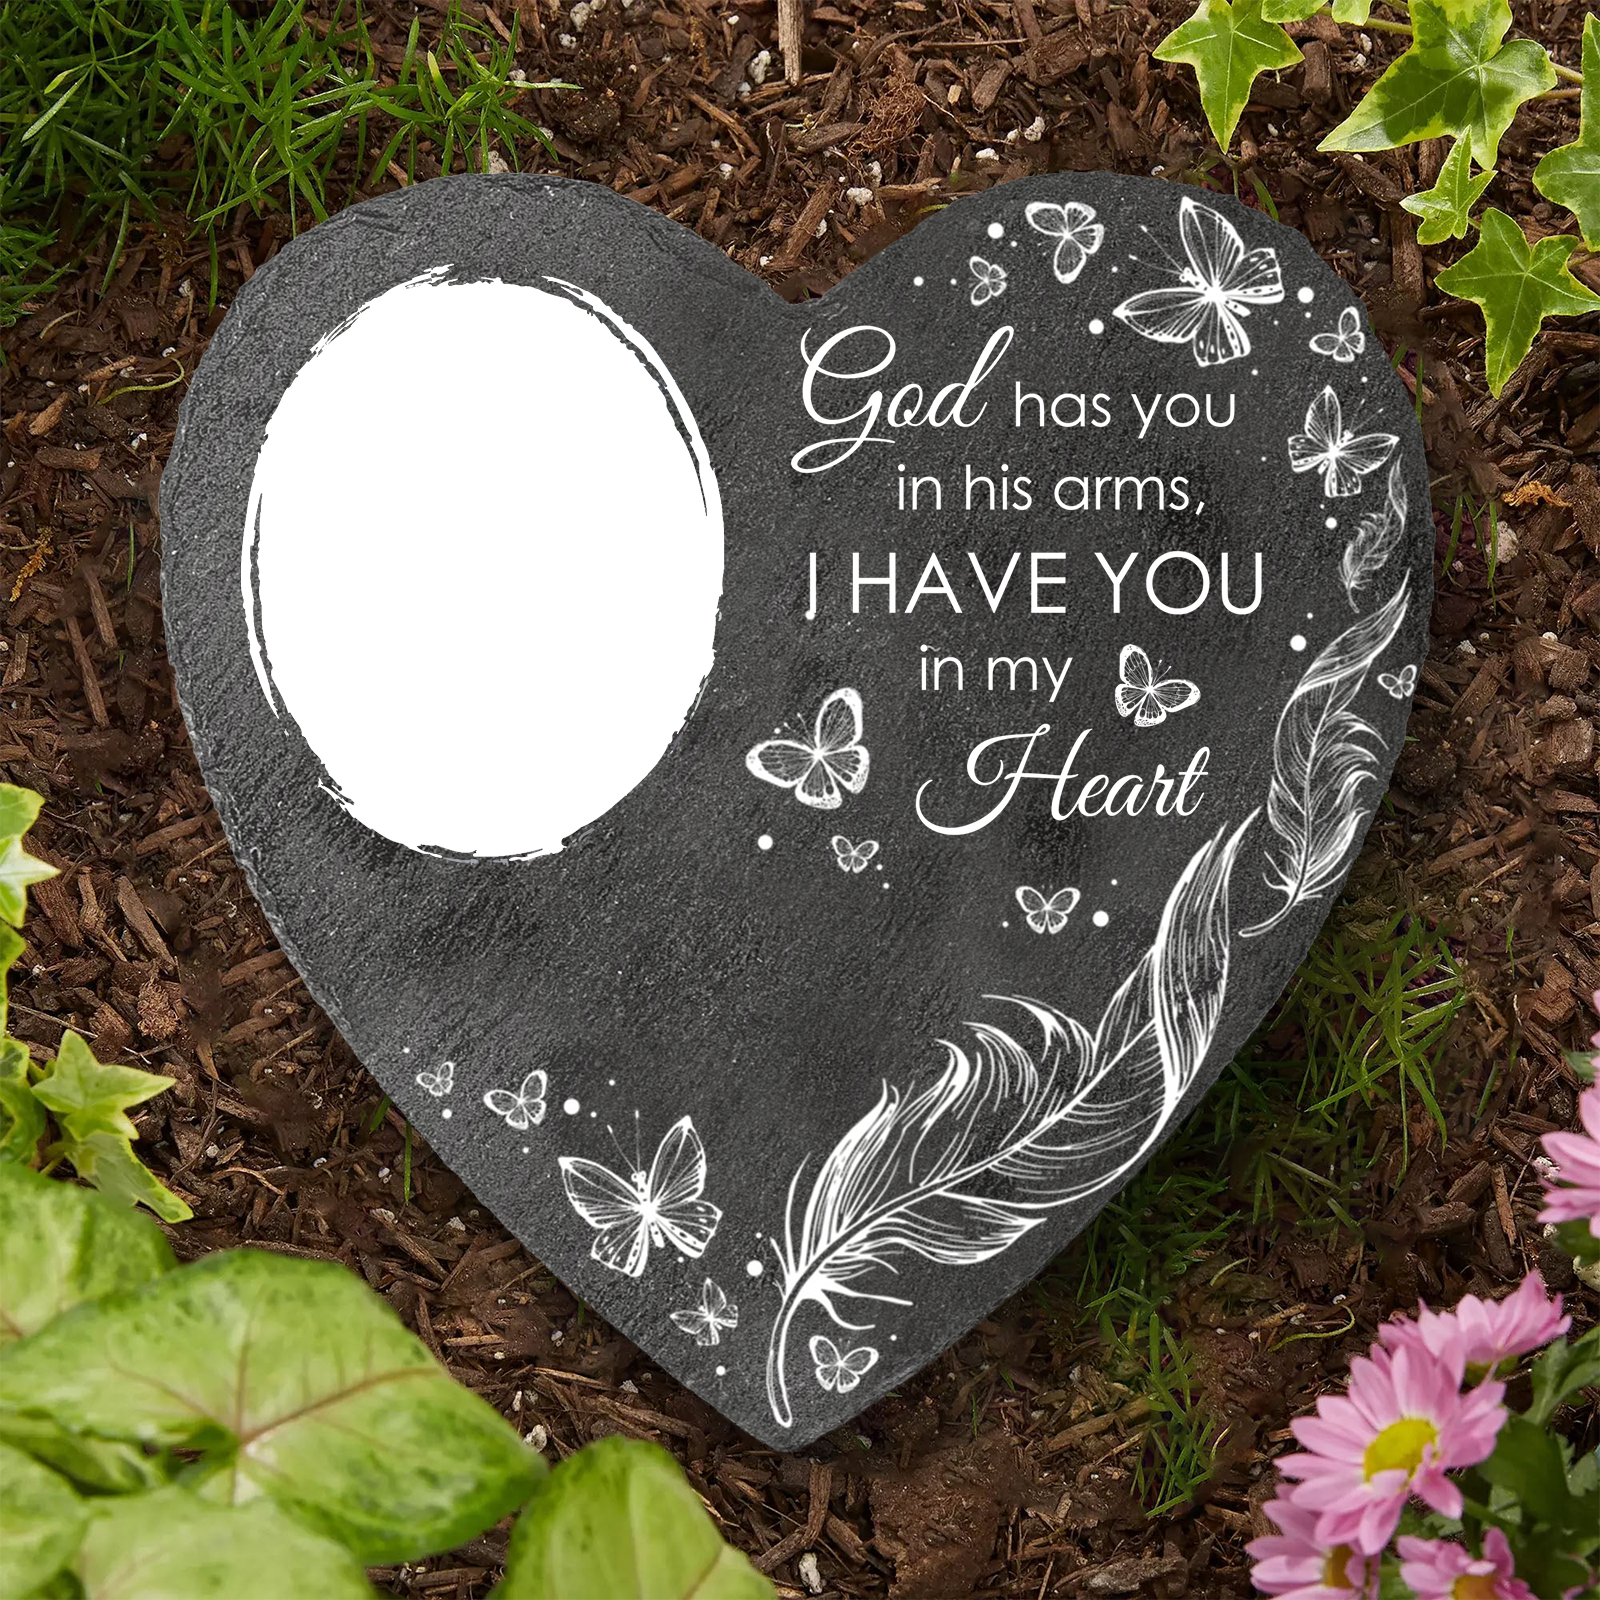 Personalized Garden Stone - Memorial, Loving Gift For Family Members